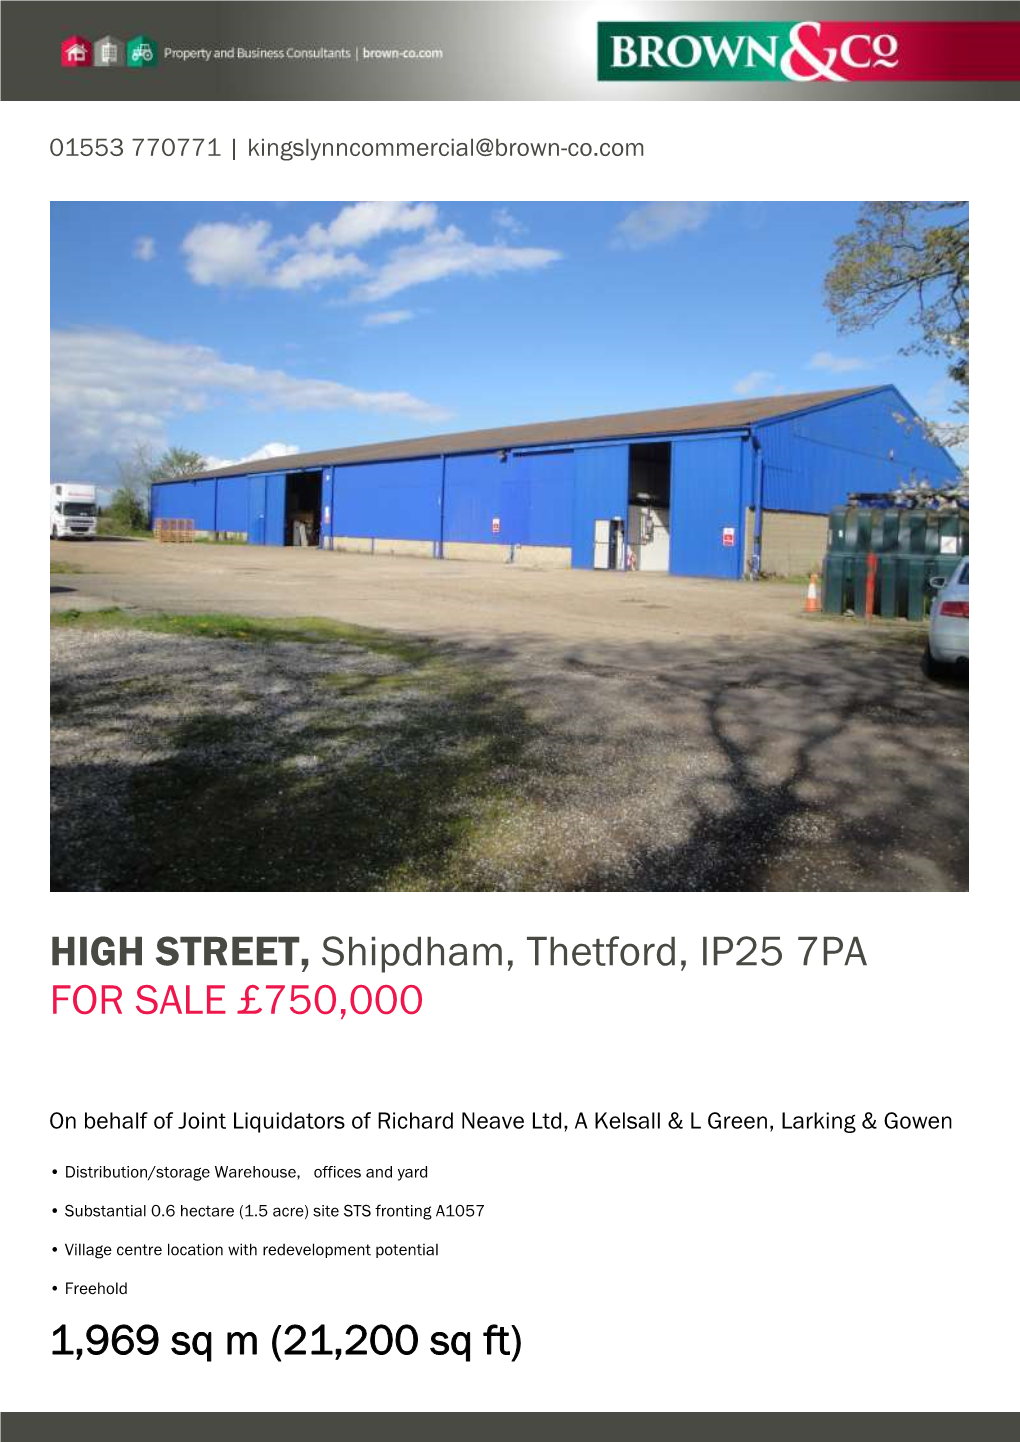 HIGH STREET, Shipdham, Thetford, IP25 7PA for SALE £750,000